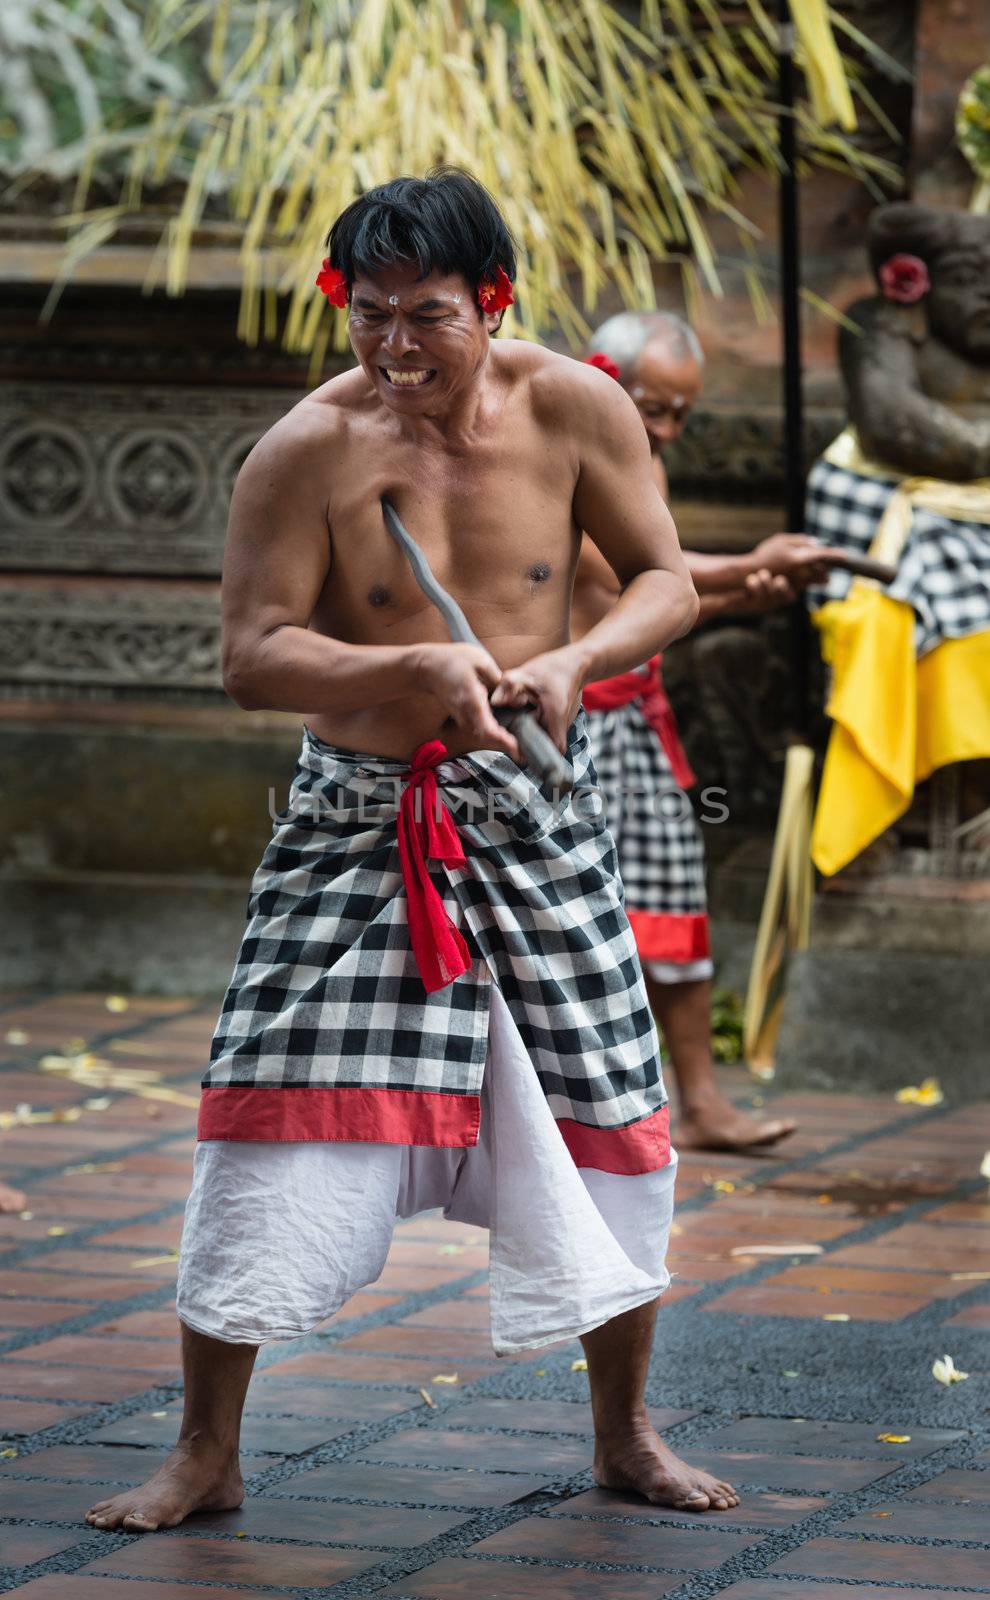 UBUD, BALI, INDONESIA - SEP 21: Kris wielding man performs ritual dance on traditional balinese Barong show on Sep 21, 2012 in Ubud, Bali, Indonesia. The show is popular tourist attraction on Bali